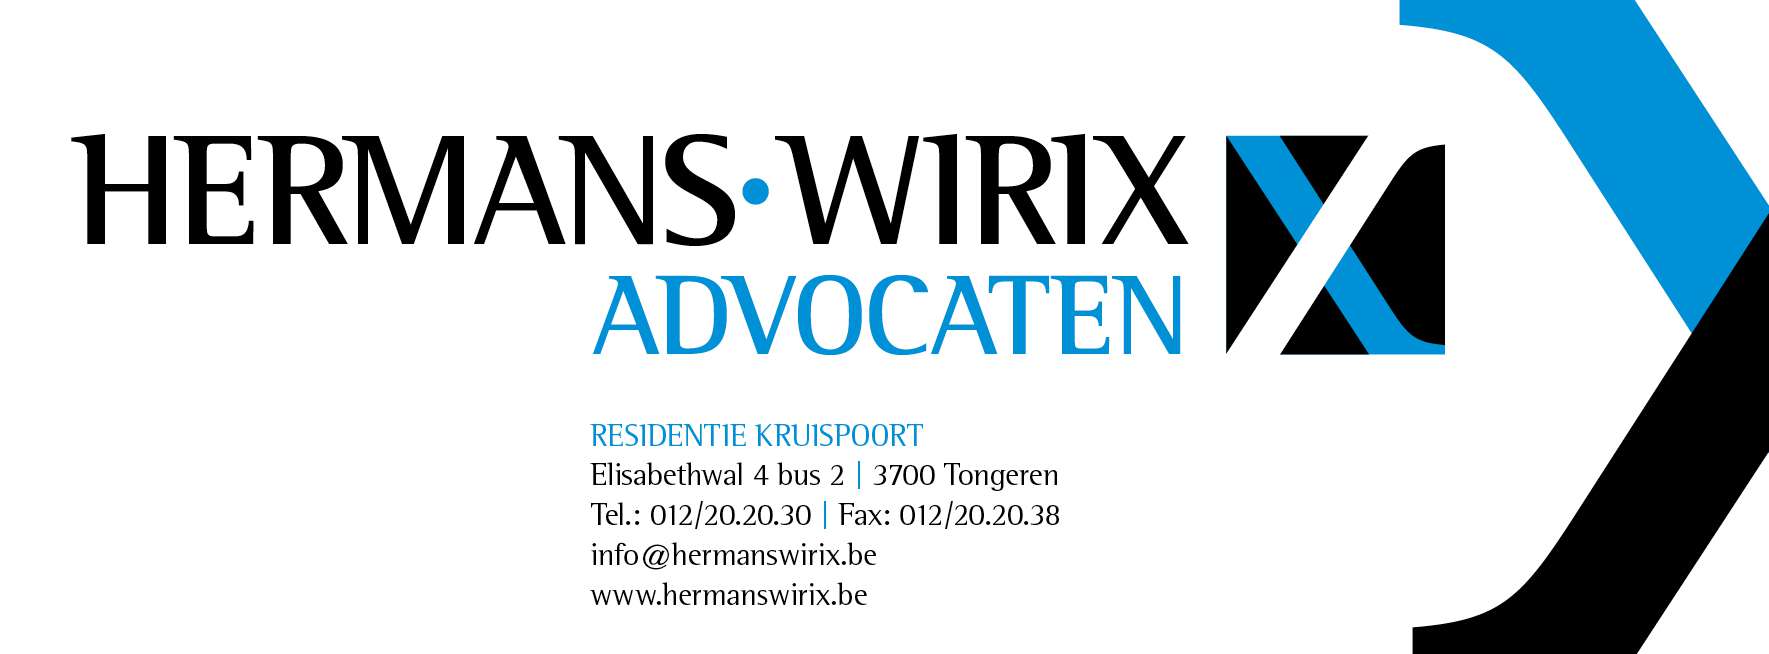 advocaten Hasselt Hermans-Wirix advocaten